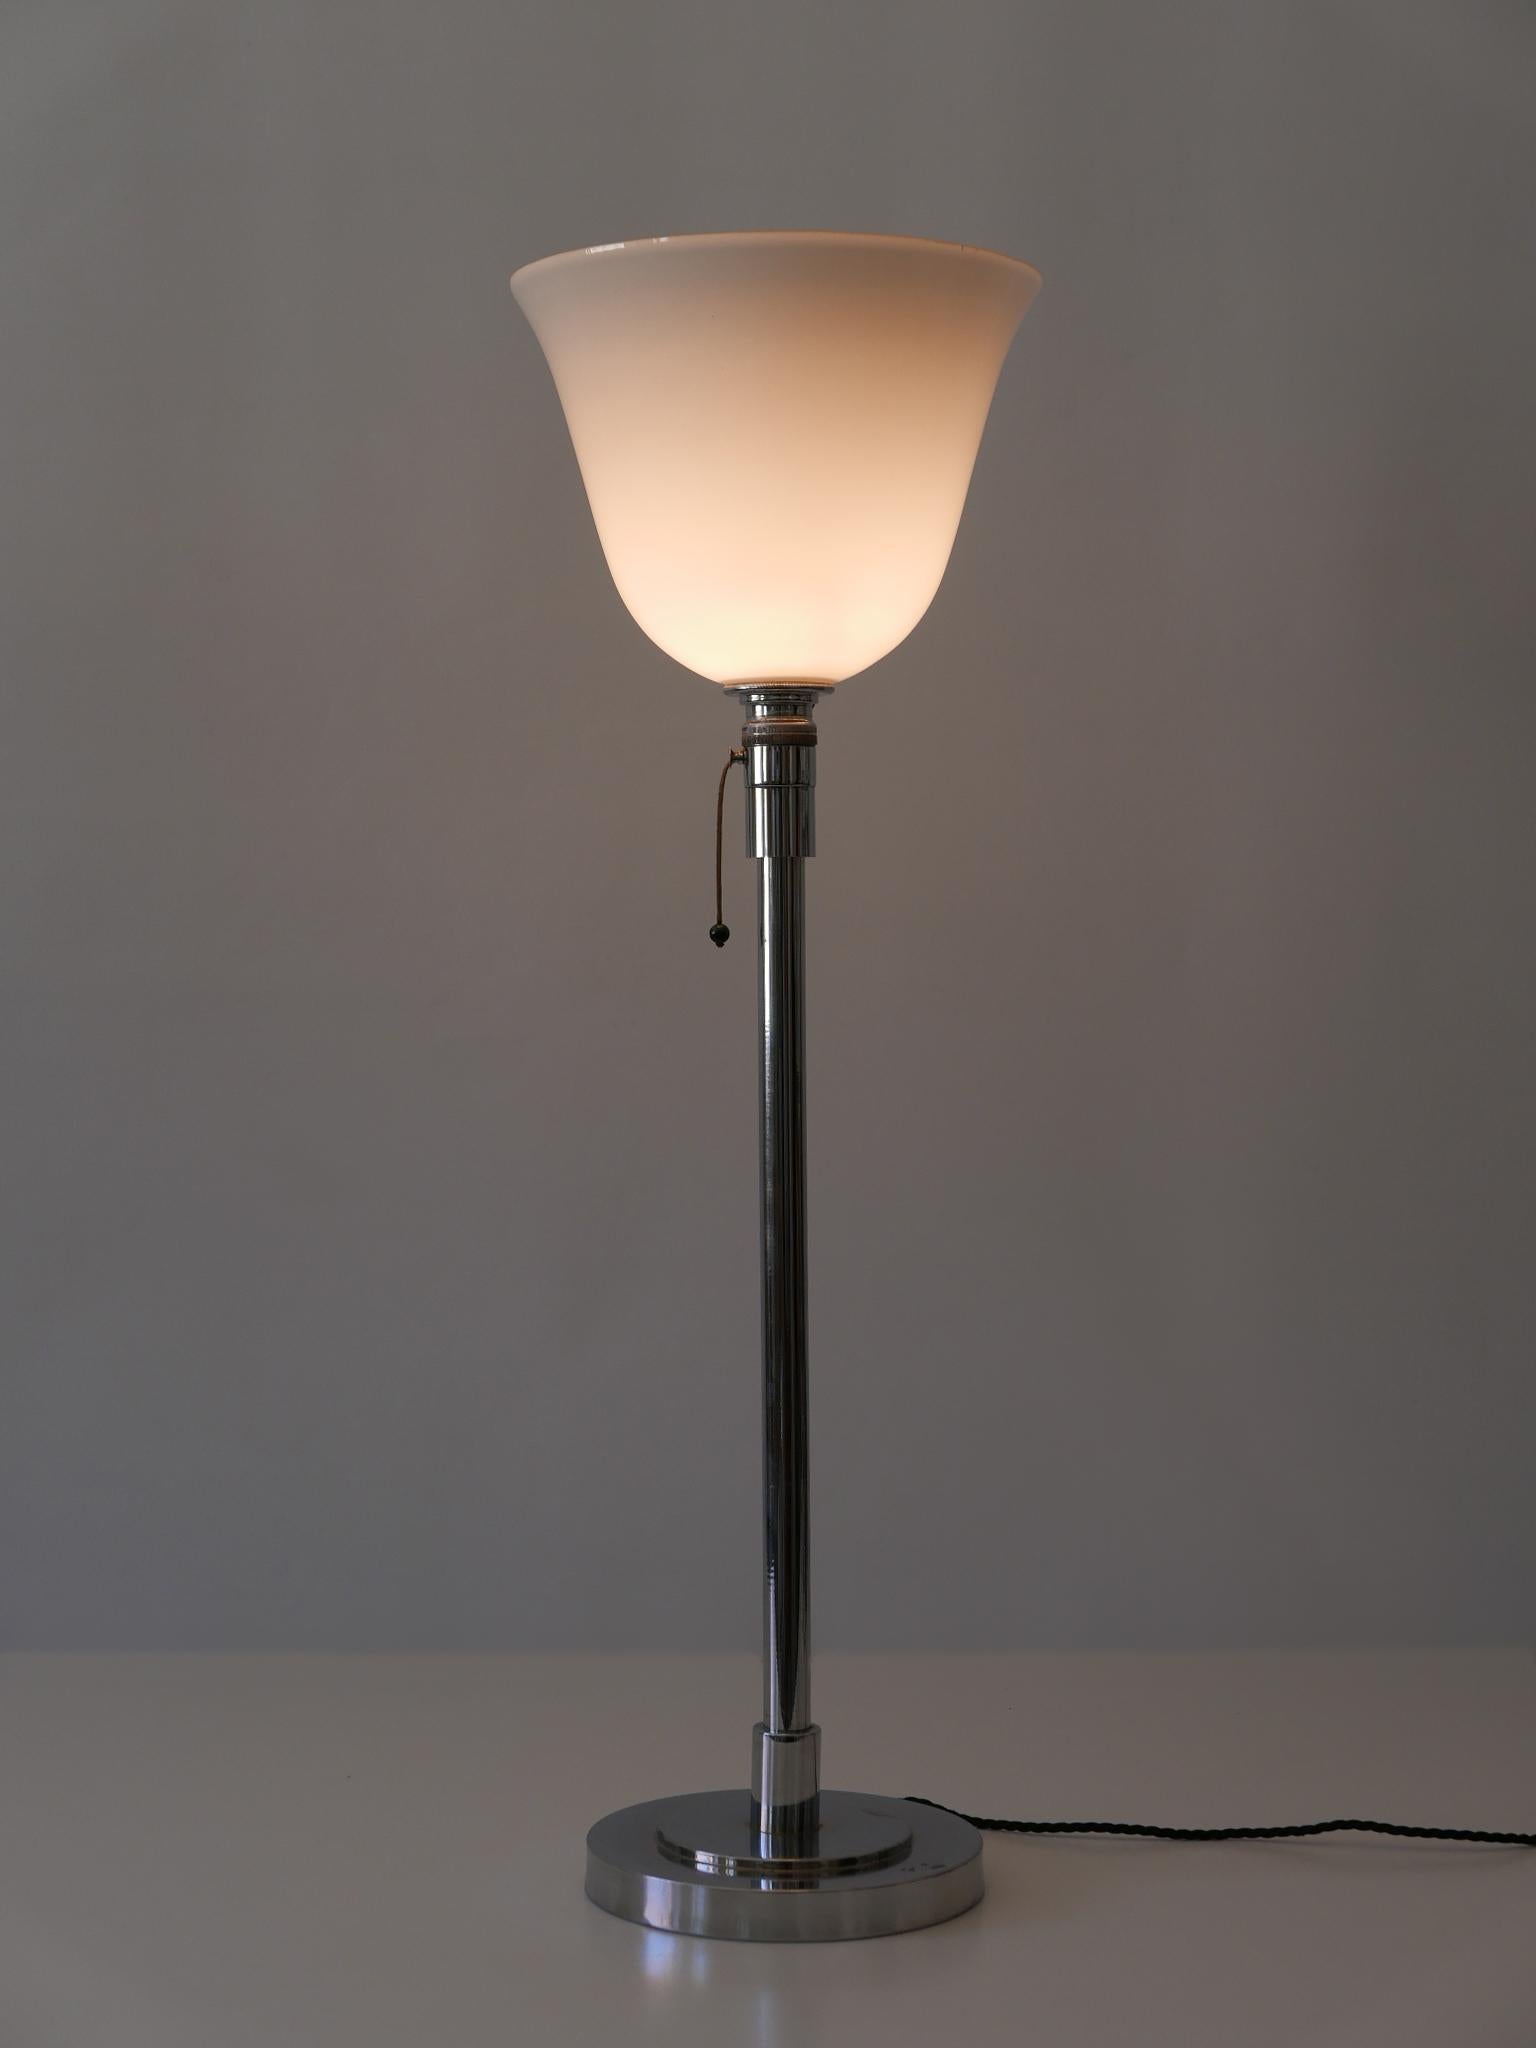 Elegant Art Deco Bauhaus Table Lamp or Floor Light by Mazda Paris, France, 1930s For Sale 1